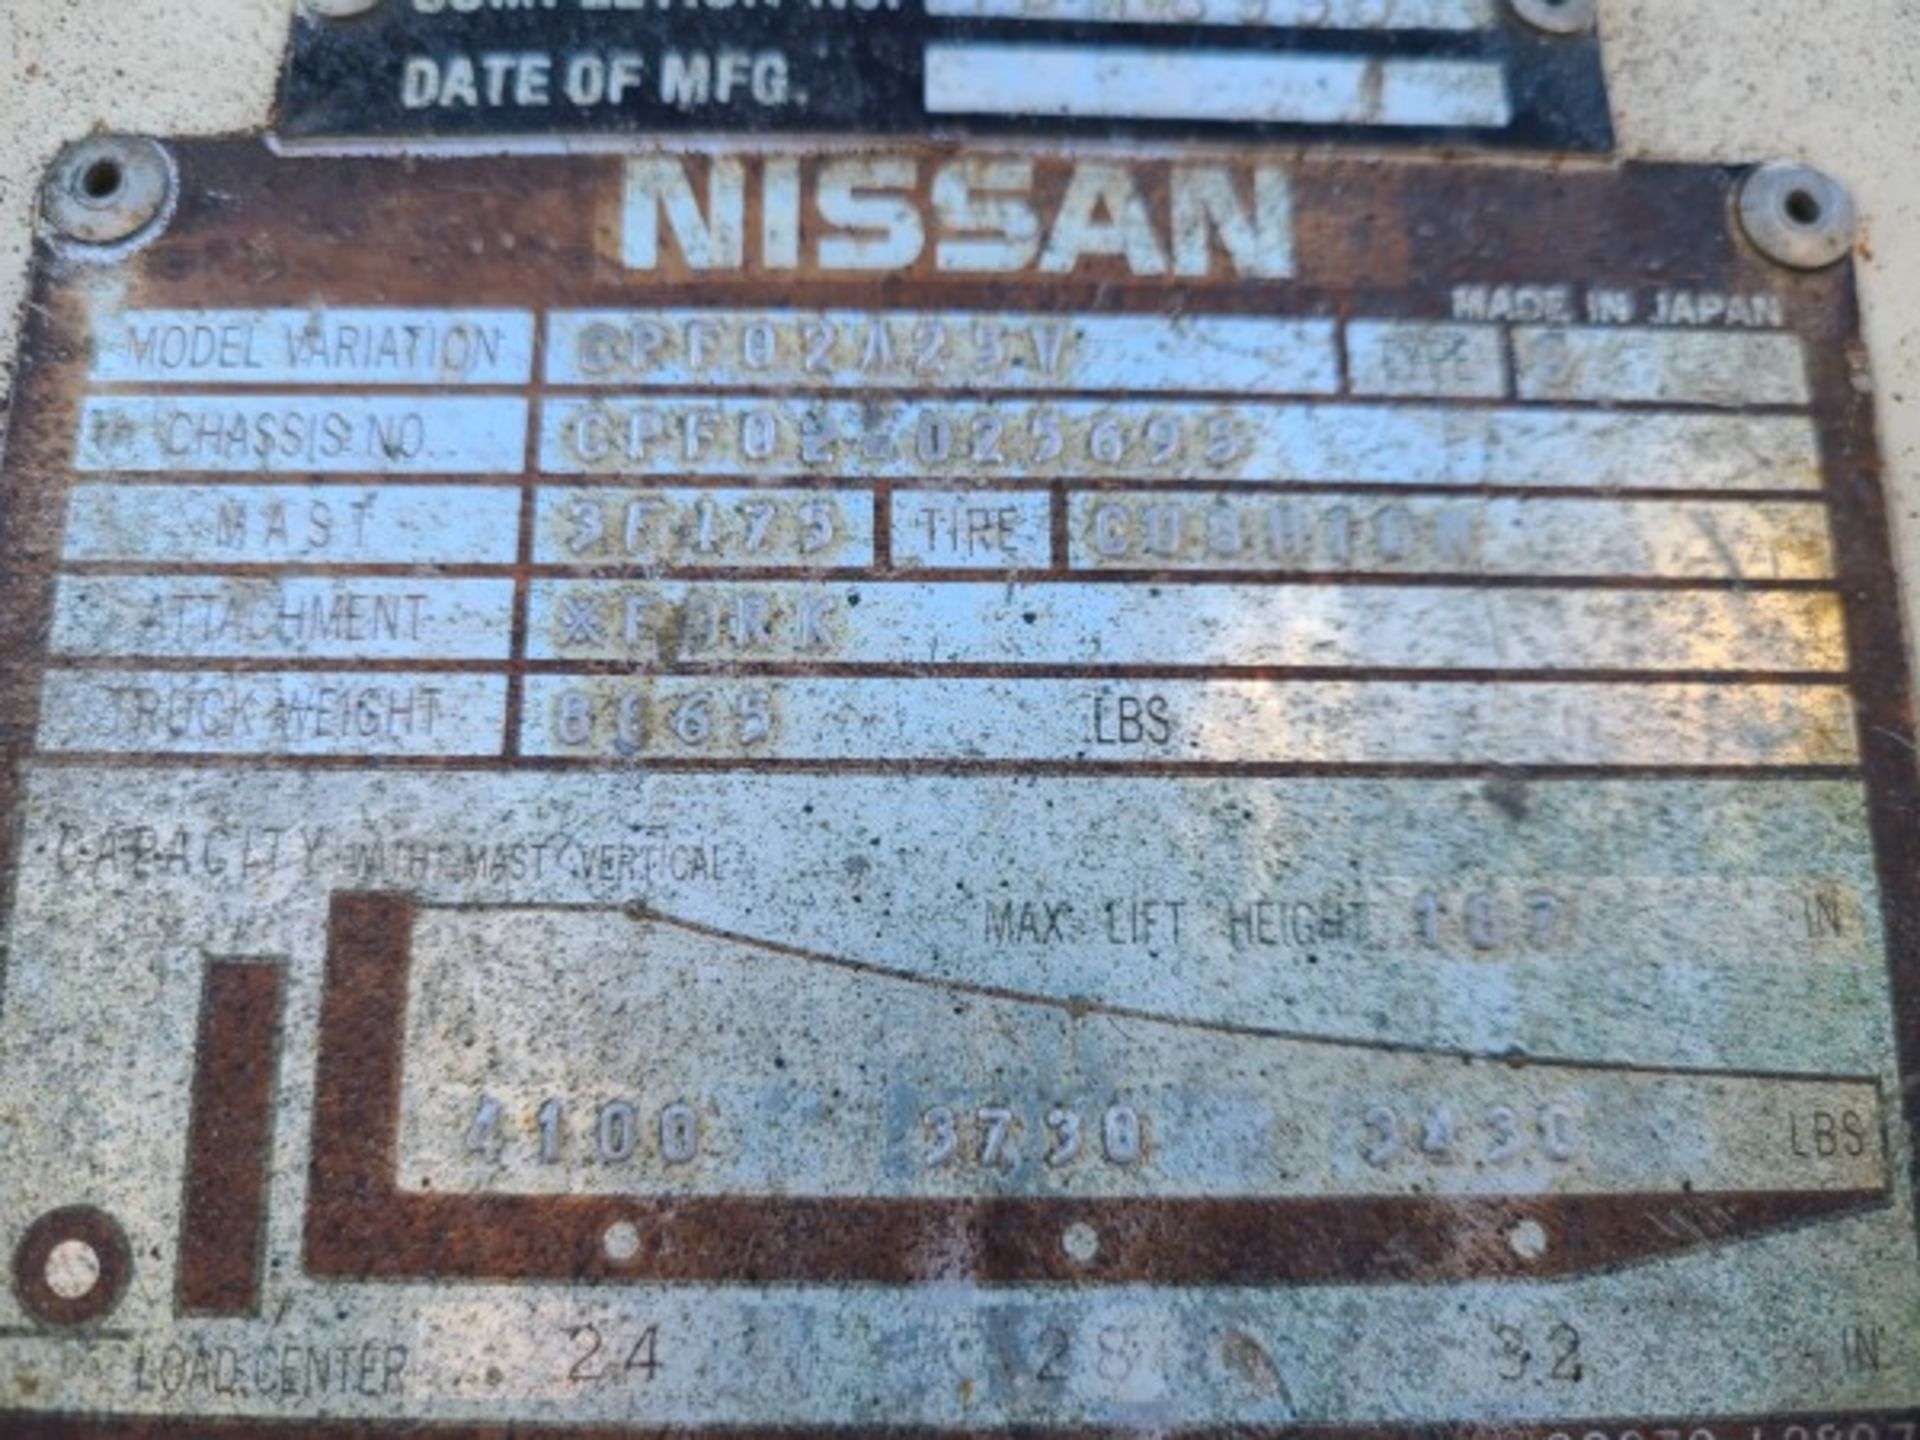 Nissan Mod. CPF02A25V, 5000 lb. cap., 218" lift, side shift, propane, cushion rubber, 3407 hrs., - Image 7 of 11